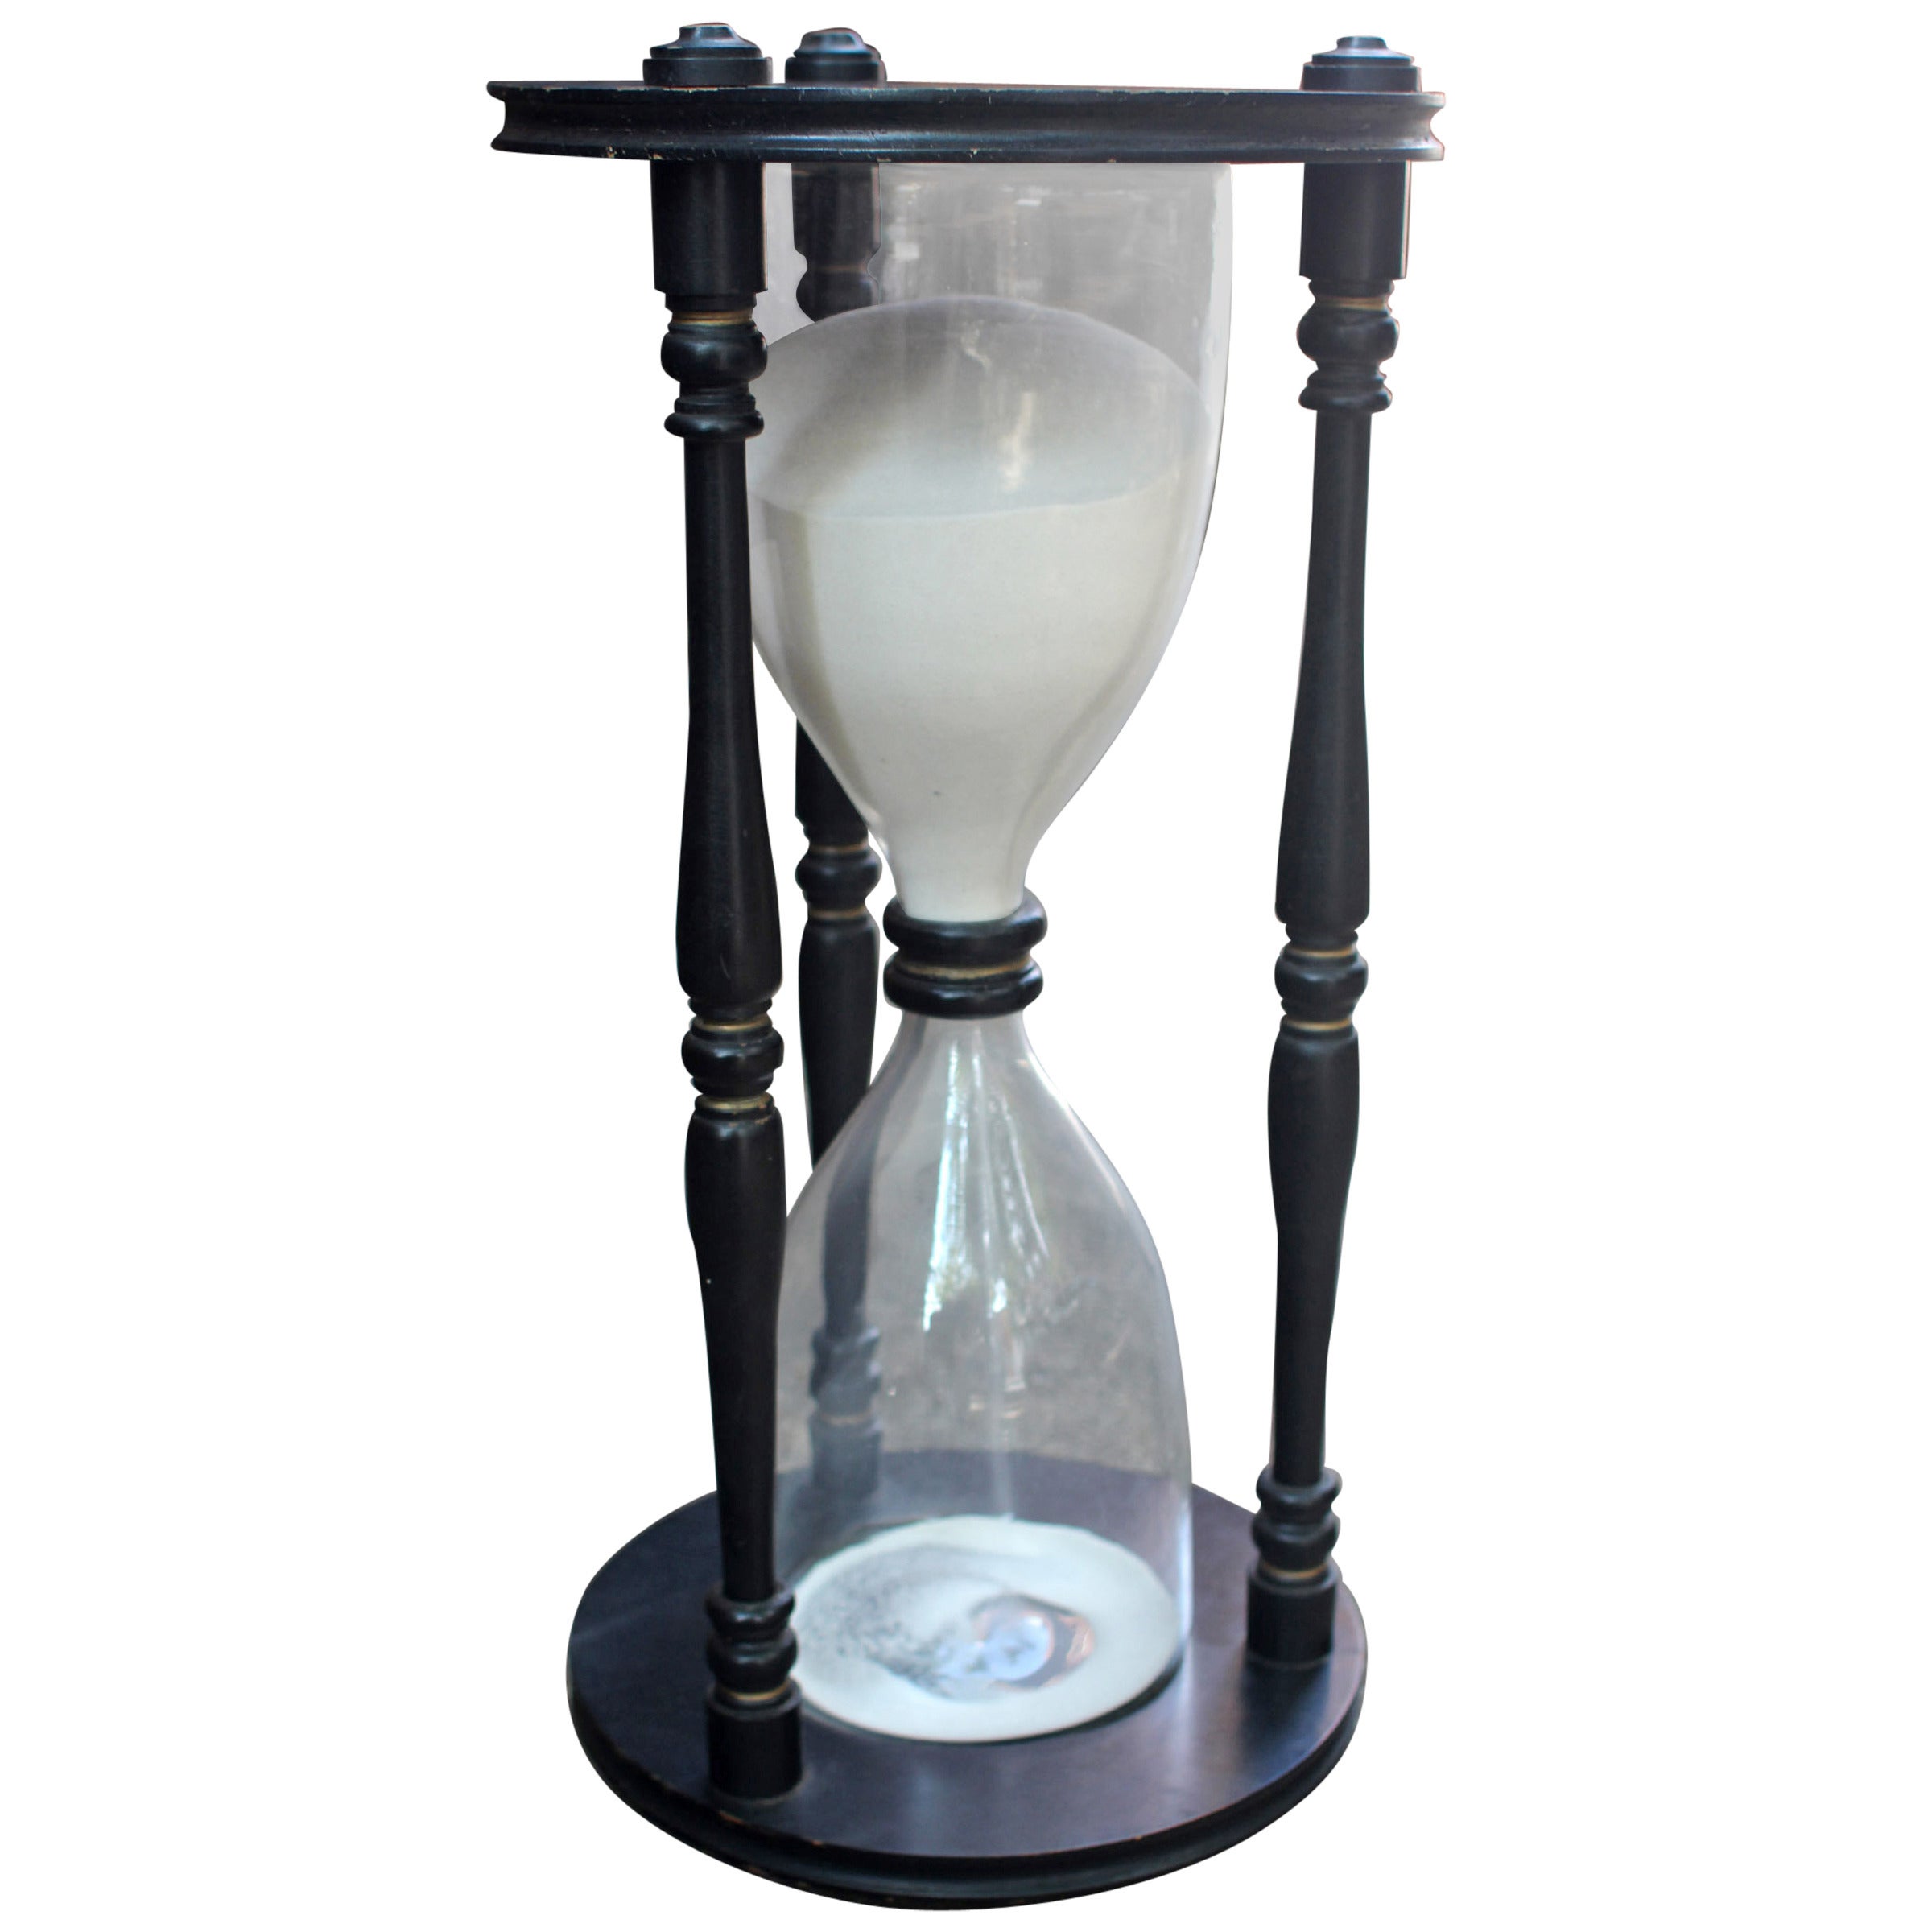 Huge 90-Minute Hourglass